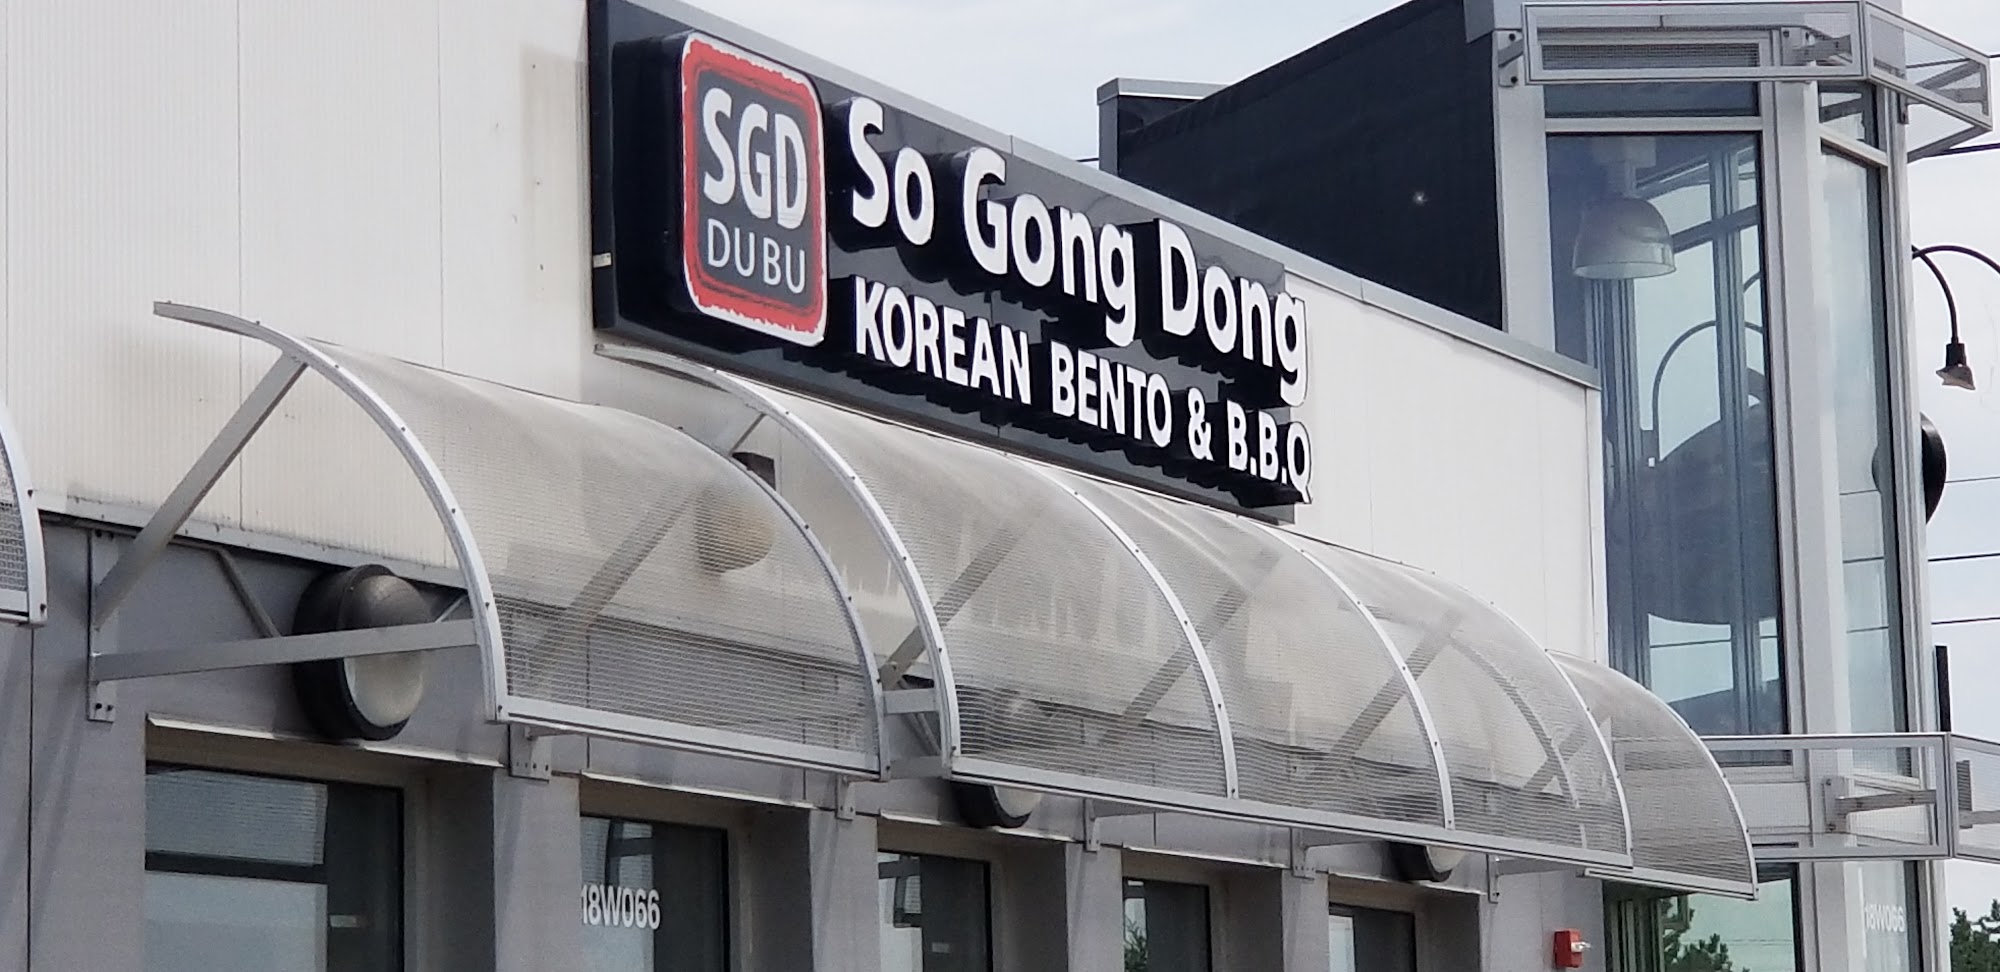 SGD Dubu So Gong Dong Korean Bento & BBQ